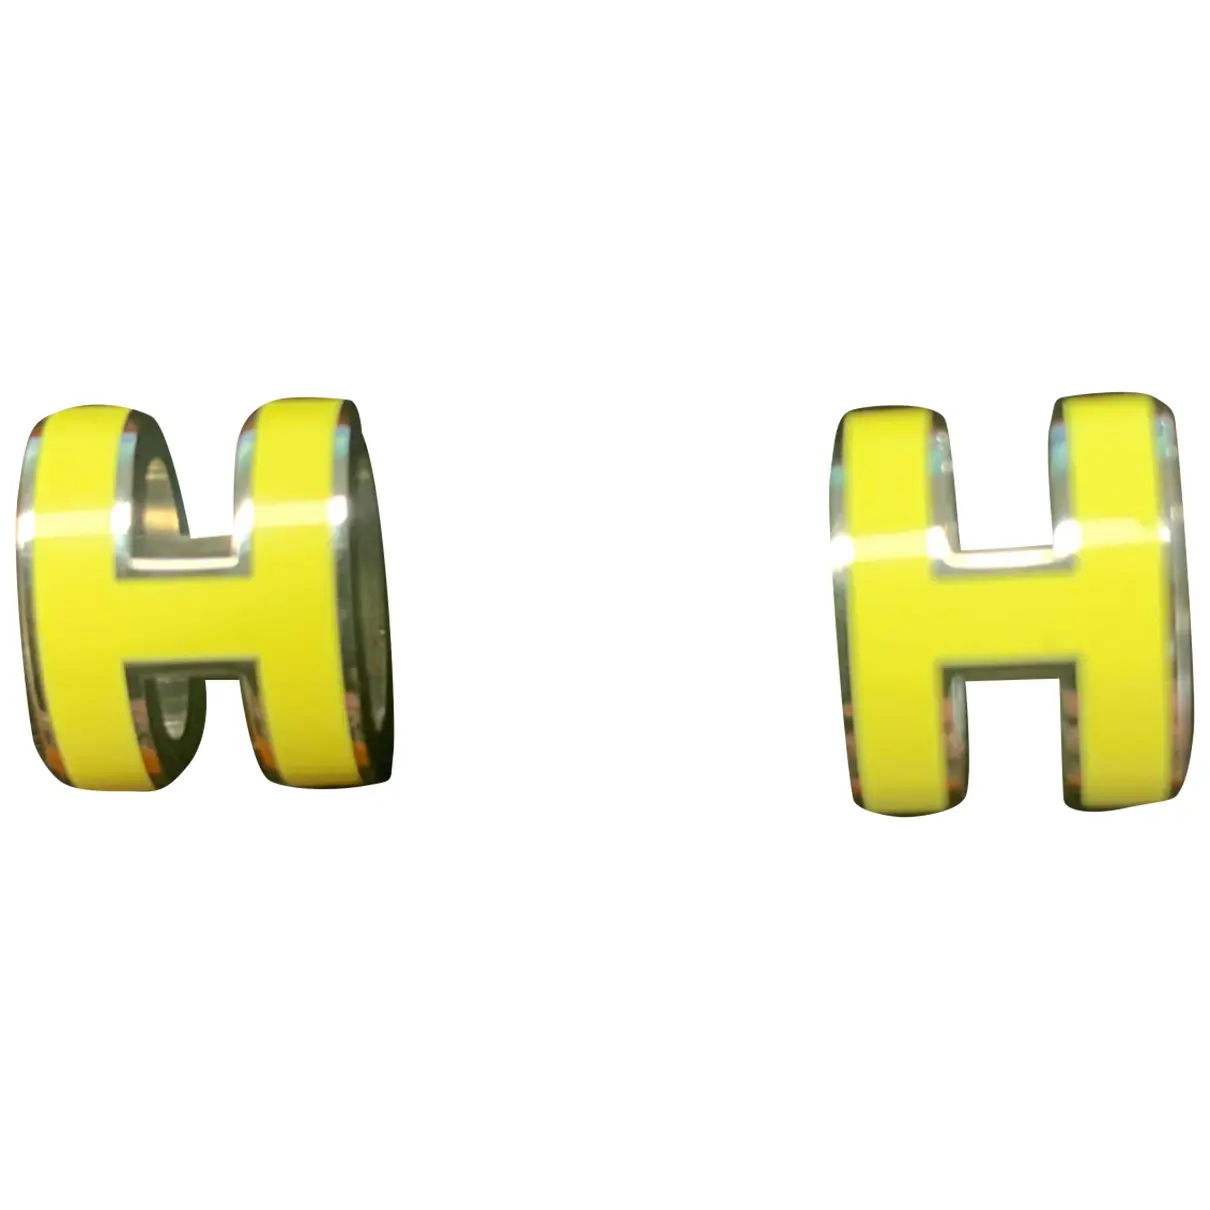 Pop H earrings Hermès